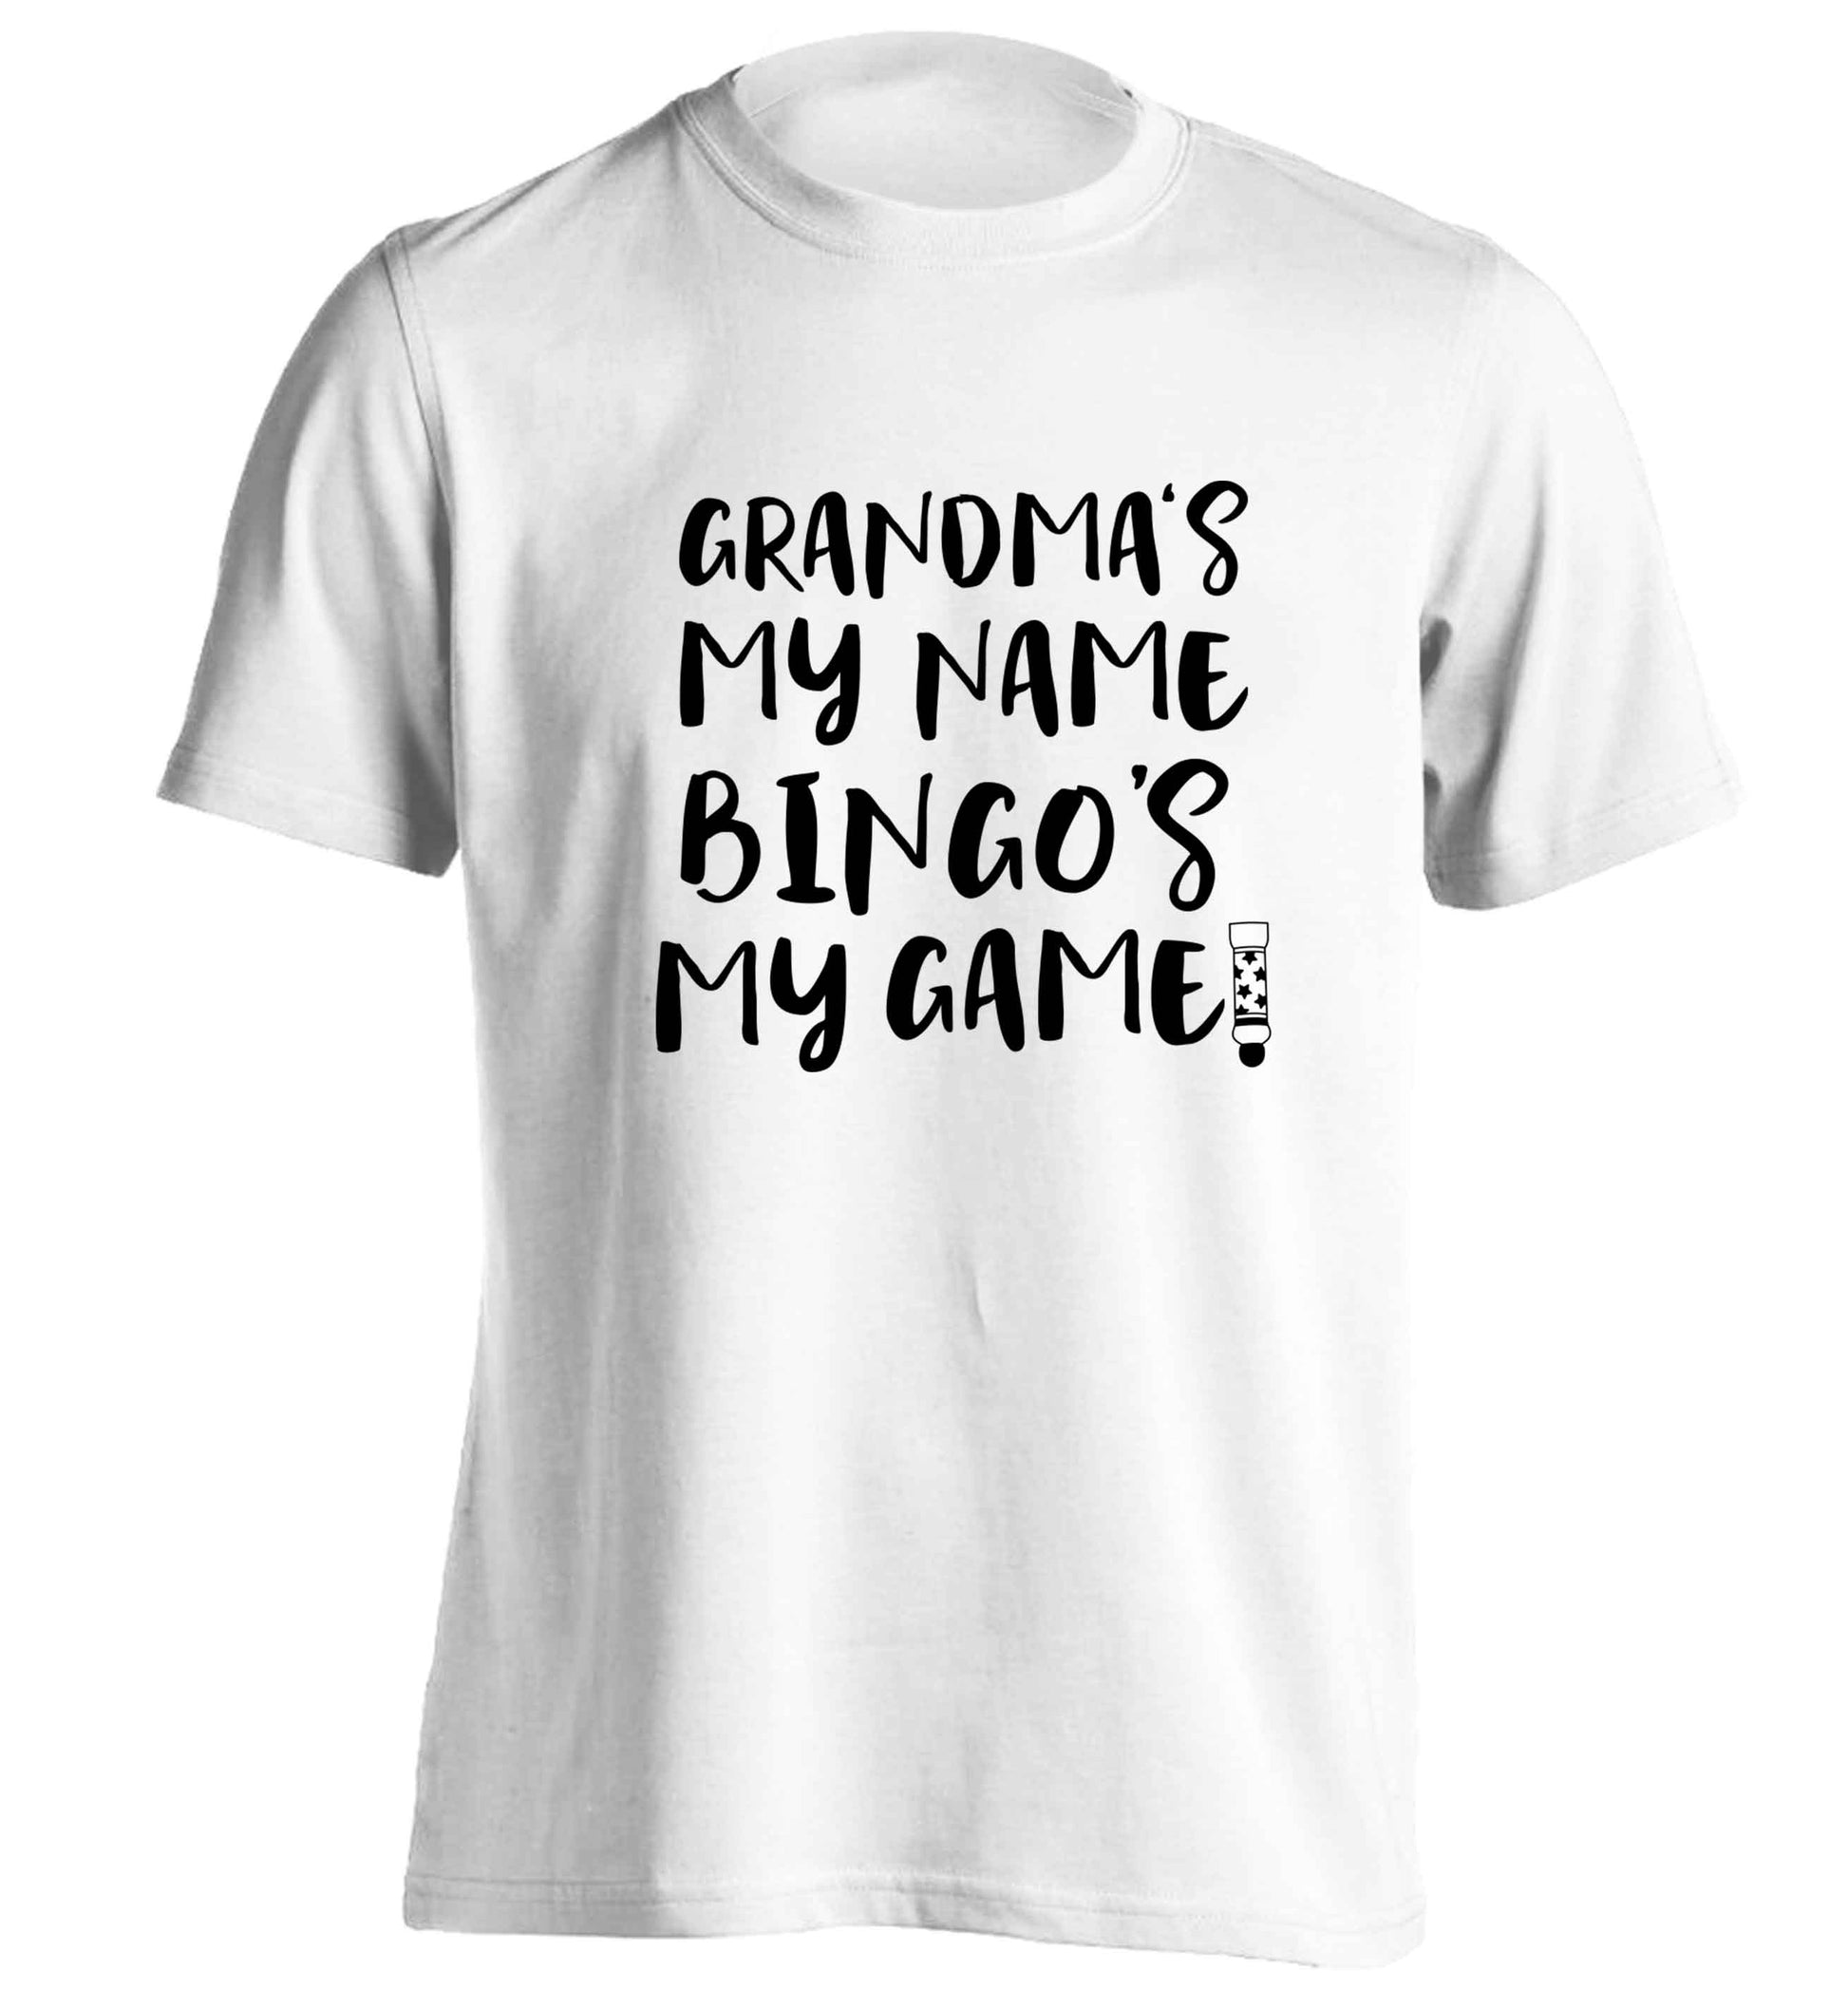 Grandma's my name bingo's my game! adults unisex white Tshirt 2XL